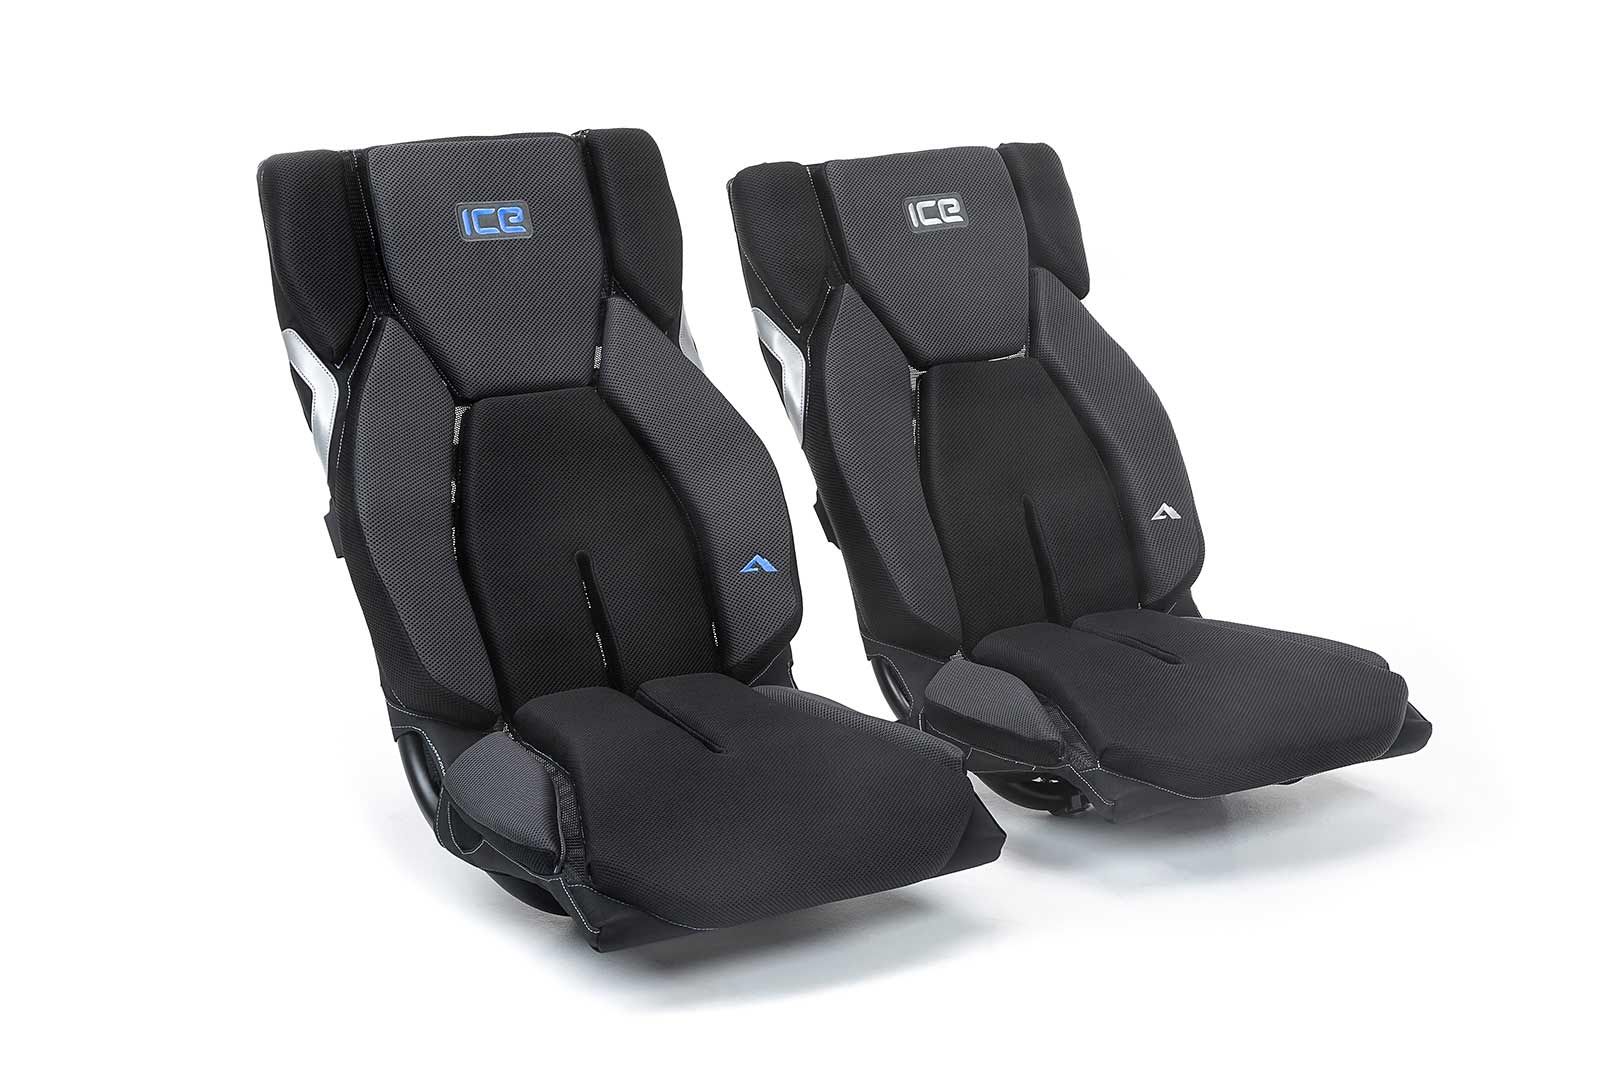 Ergo-Luxe and Ergo-Flow seating options